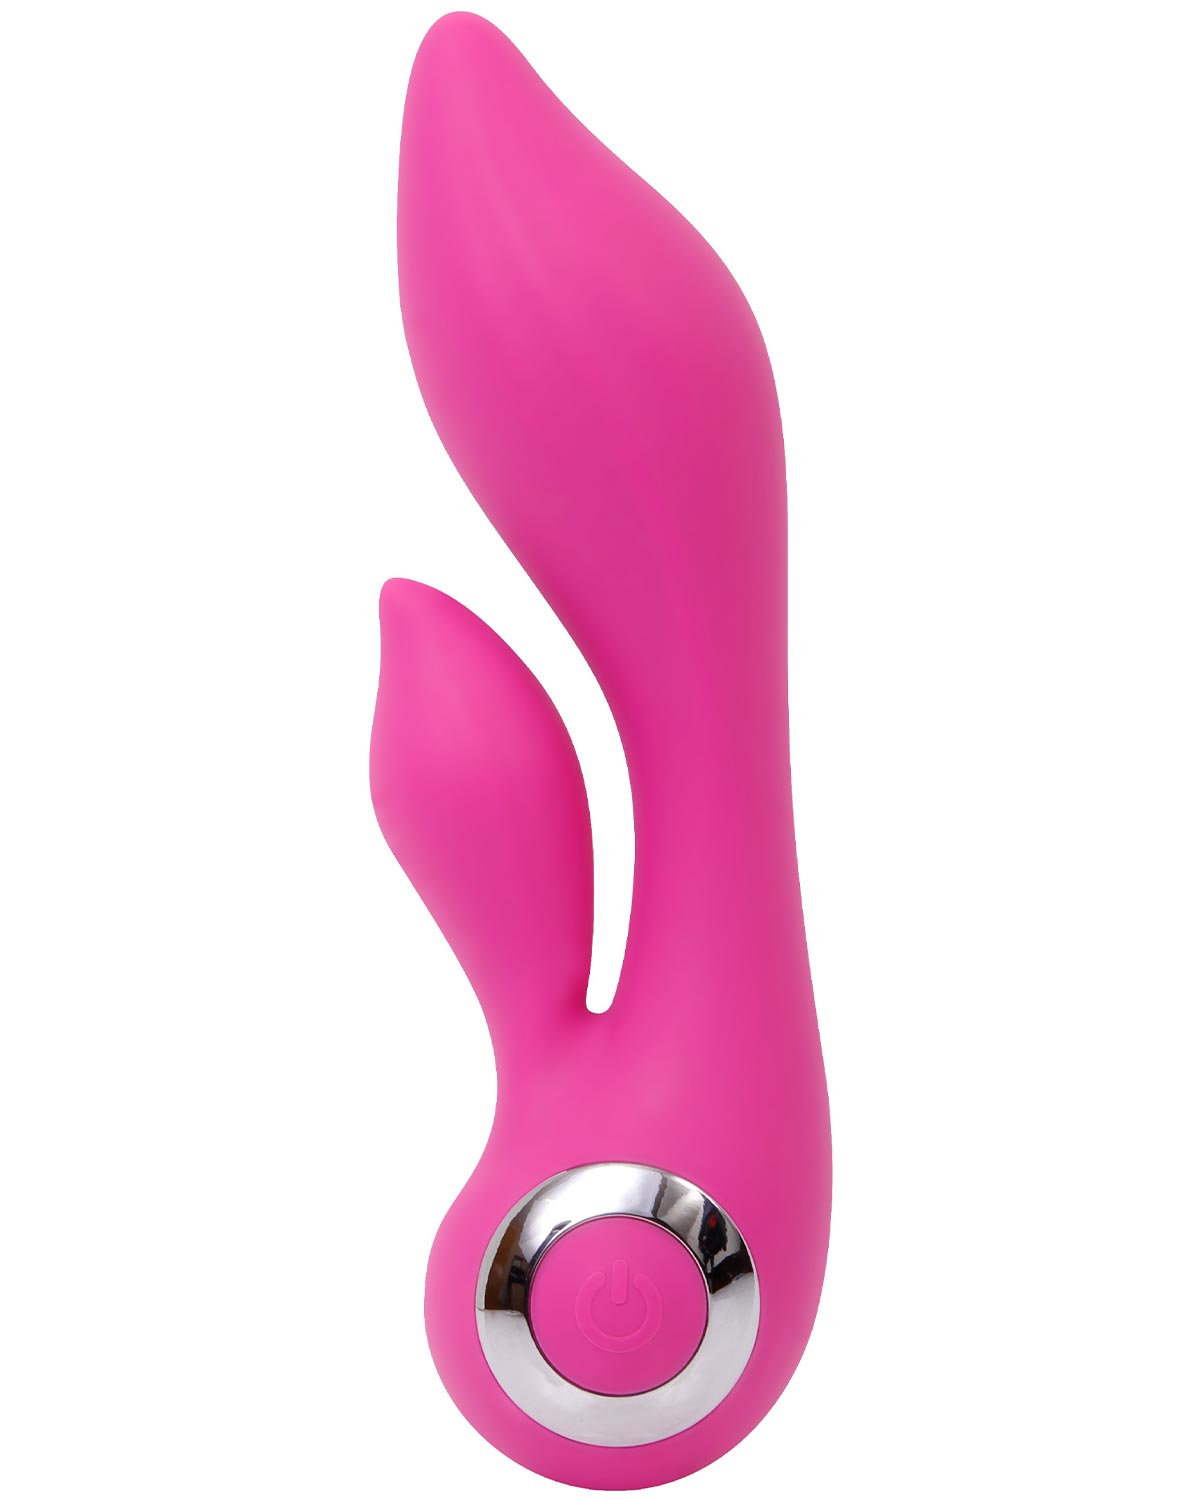 Huge jessica rabbit multispeed extendable rotating vibrating dildo sex toy